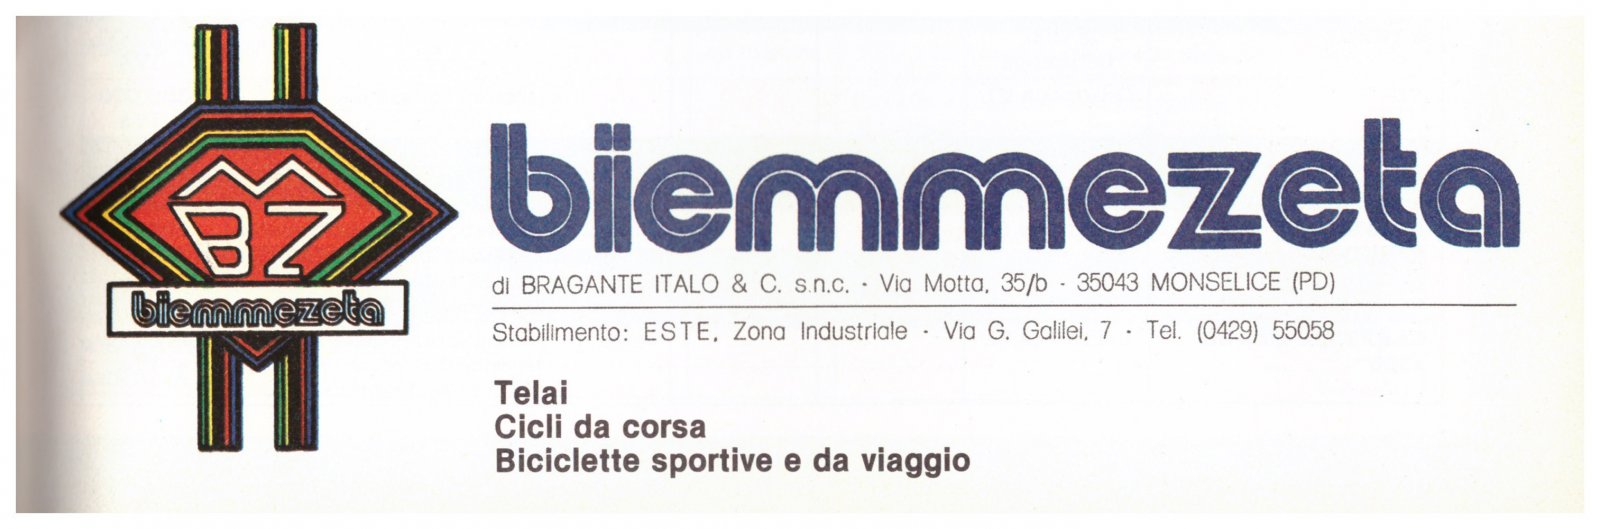 biemmezeta-1984.jpg